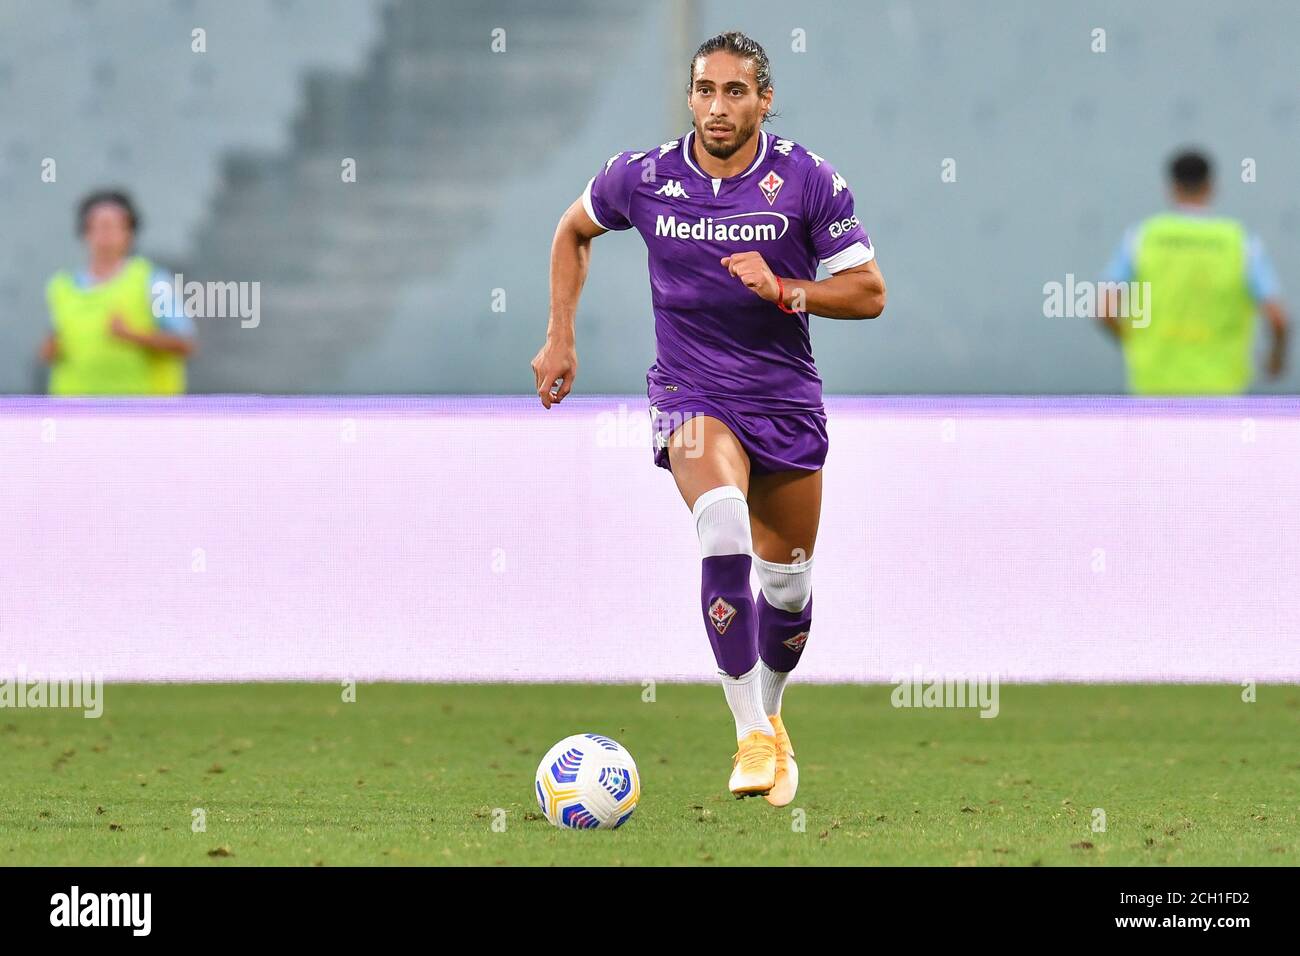 Martin Caceres (Fiorentina) during Fiorentina vs Reggiana, Soccer Test Match, Florence, Italy, 12 Sep 2020 Stock Photo